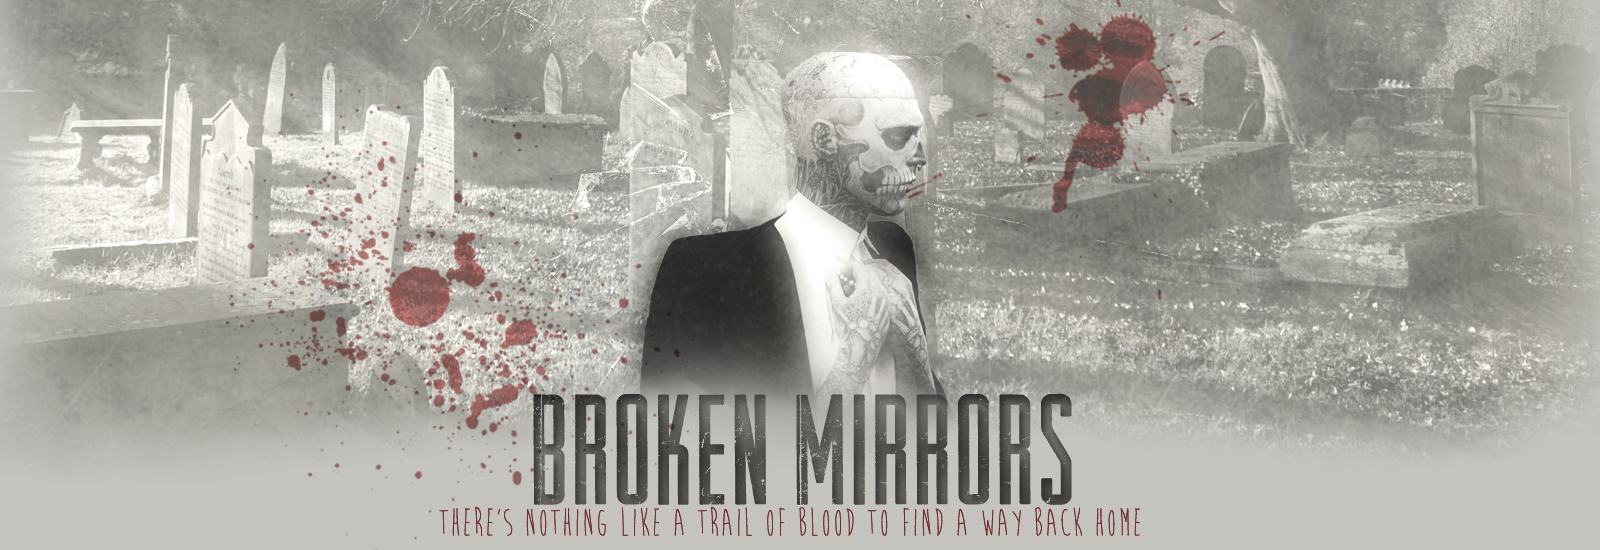 ◆ Broken Mirrors  15011708464018526512884151